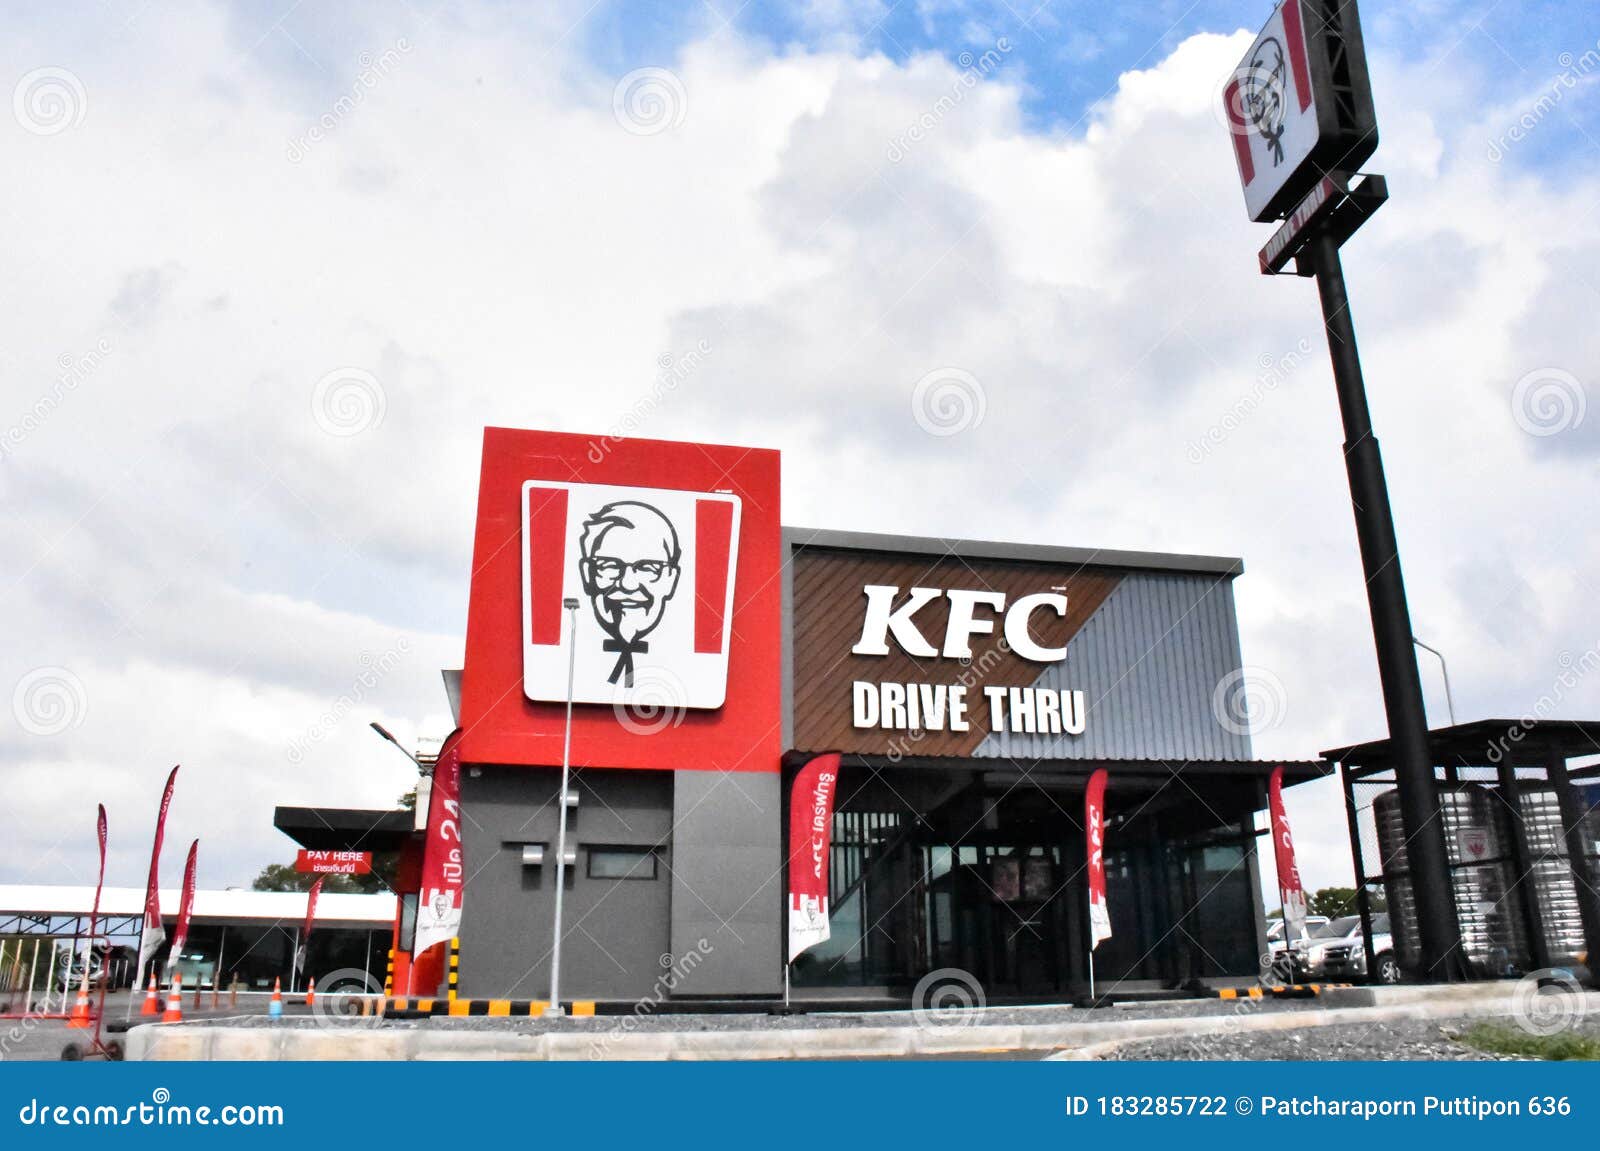 Drive Thru, KFC Fast Food Restaurant. Kentucky Fried Chicken KFC